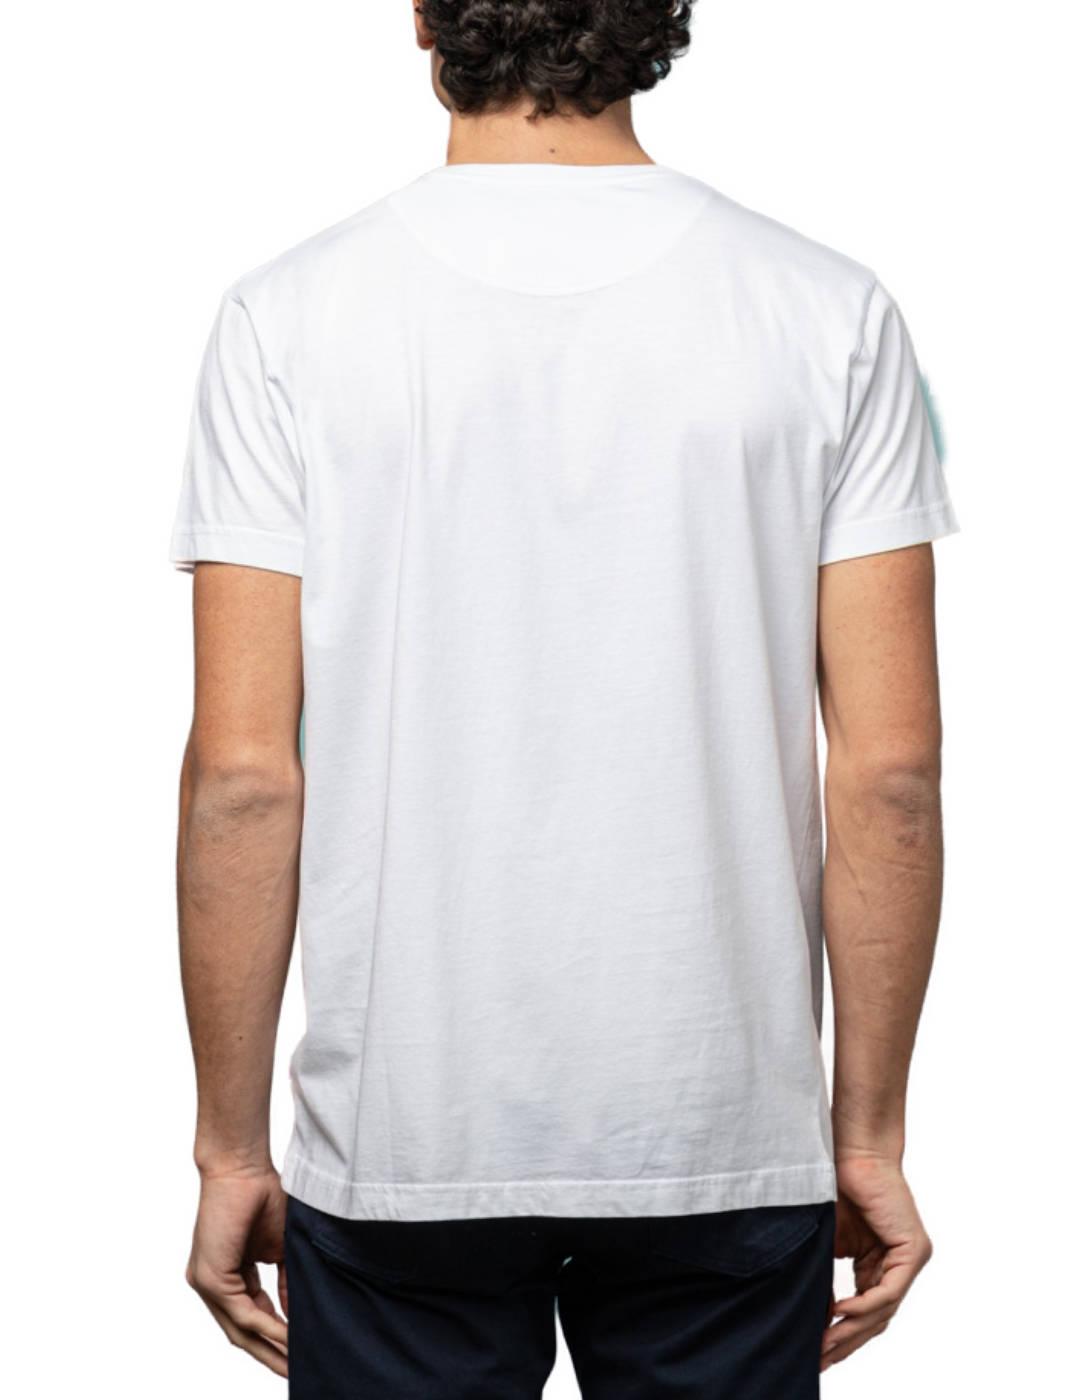 Camiseta Scotta Rainy blanca manga corta para hombre